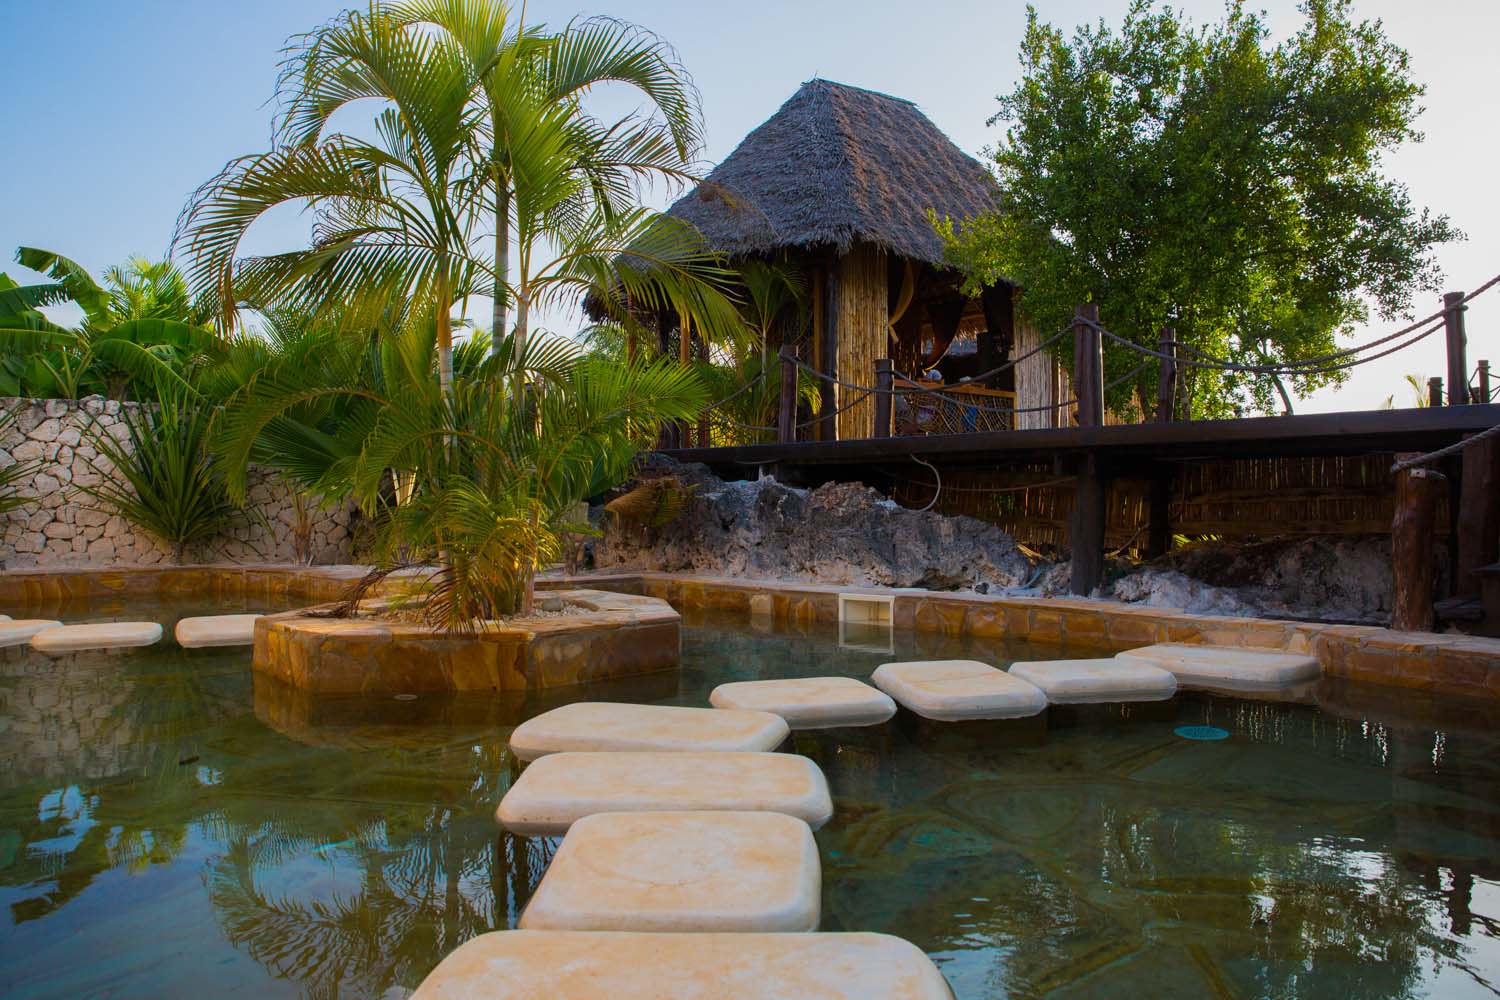 Спа 19. Fruit and Spice Wellness Resort. Fruit & Spice Wellness Resort Zanzibar. Занзибар джунгли. Спа джунгли отдых на море.